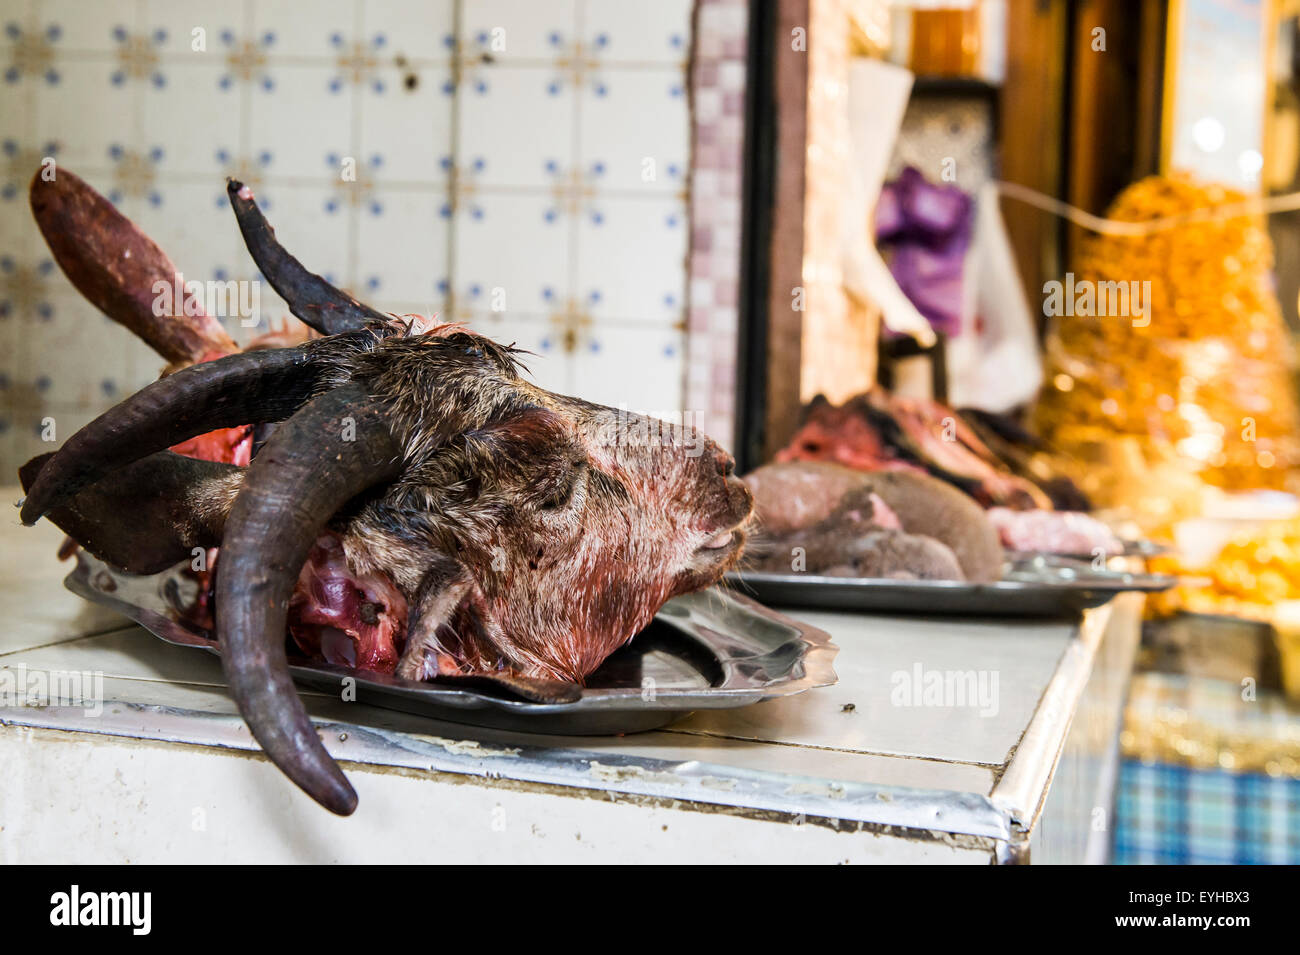 butchers-with-goat-head-on-display-souk-fes-morocco-EYHBX3.jpg